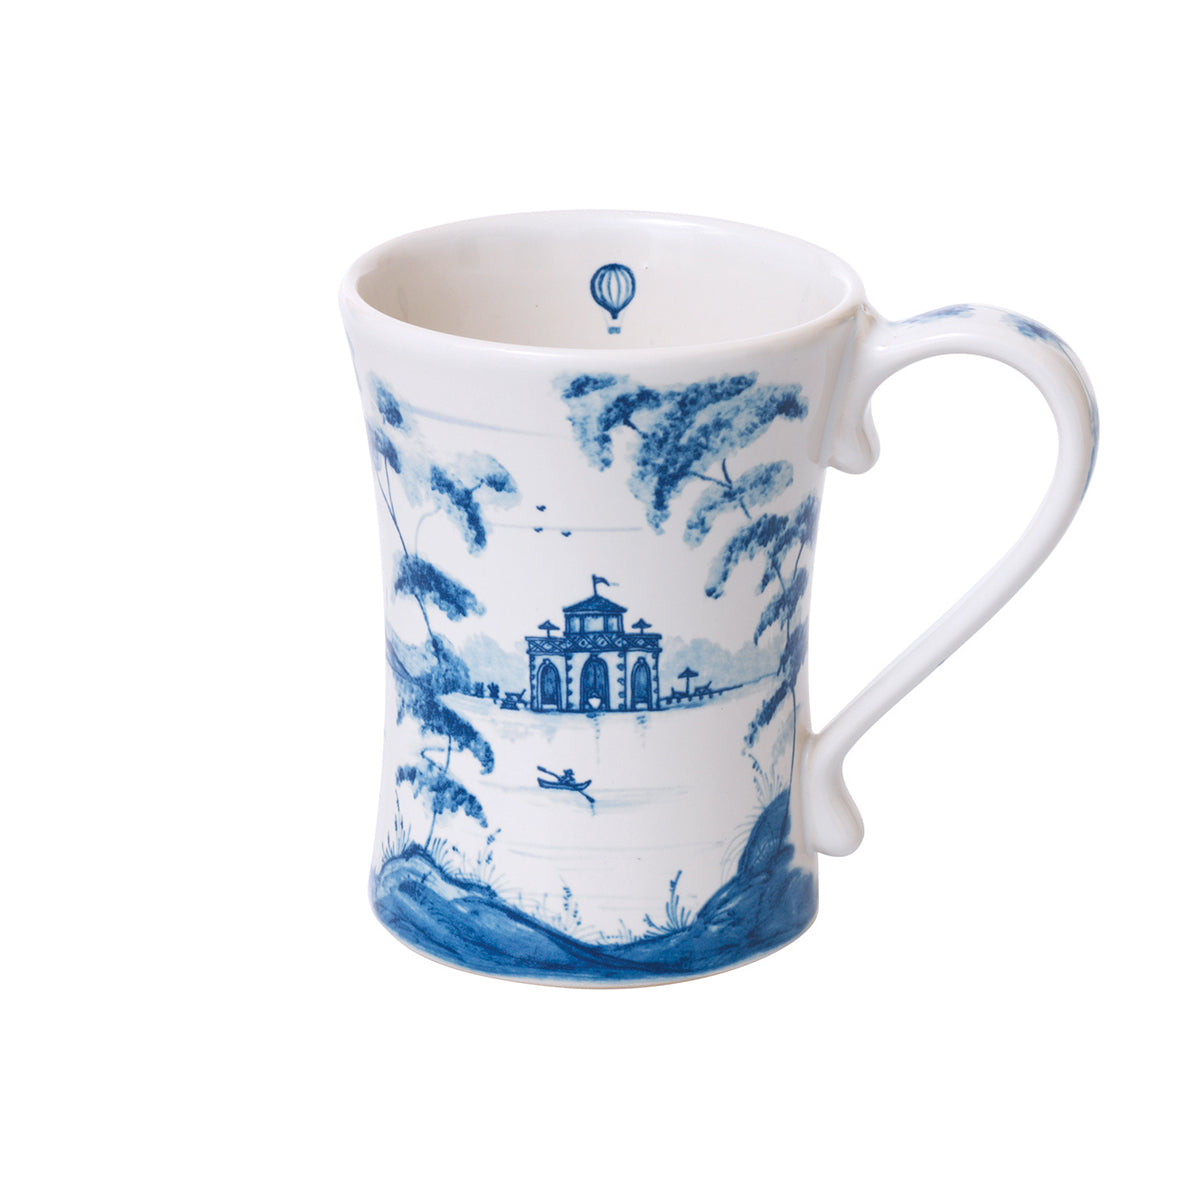 Country Estate Mug Set-4 - Delft Blue-2nd